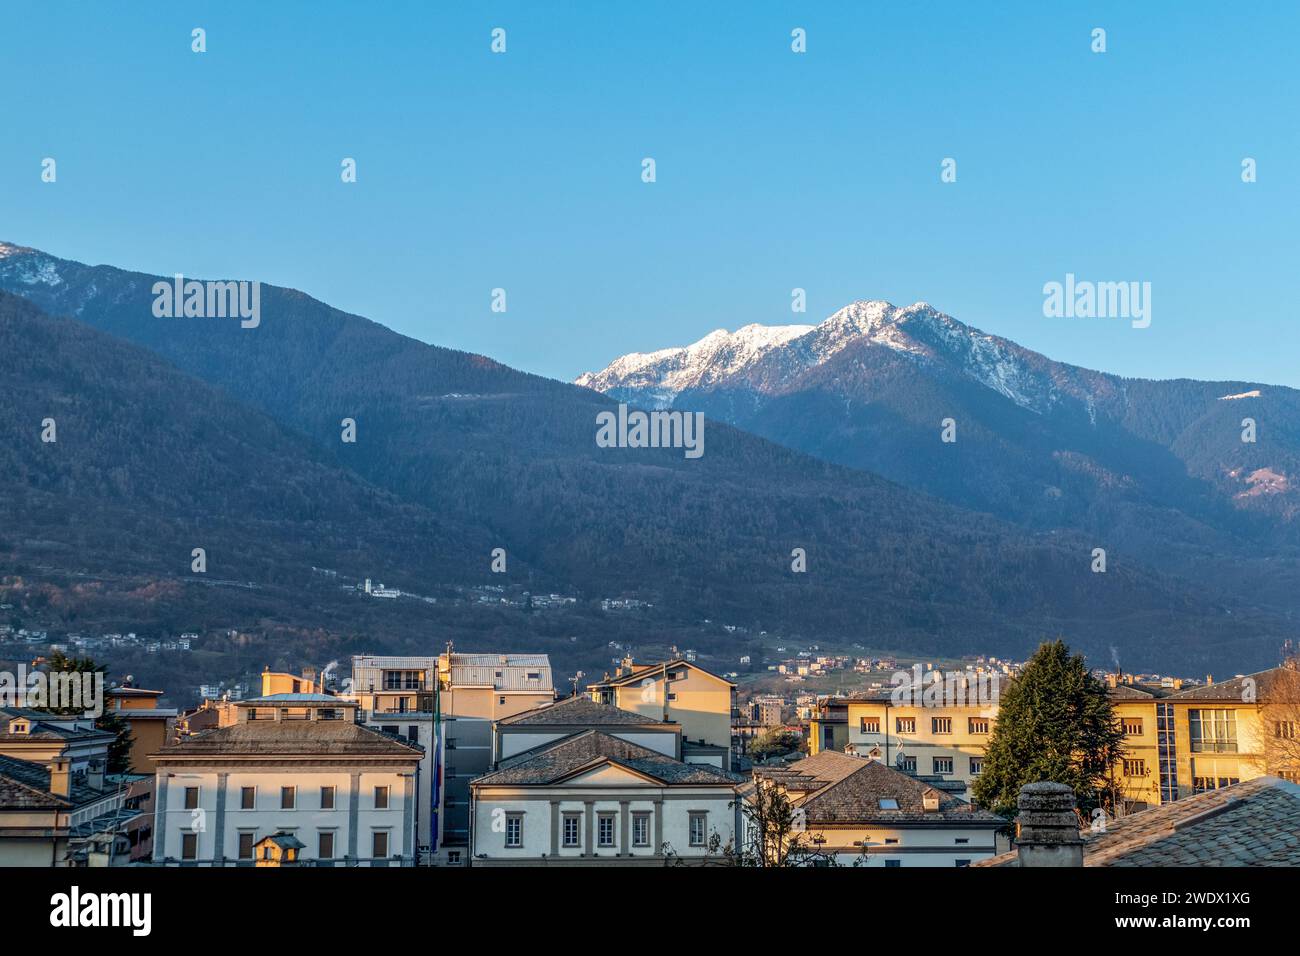 scenic view to village of Sondrio in the alpine region of Italy Stock Photo